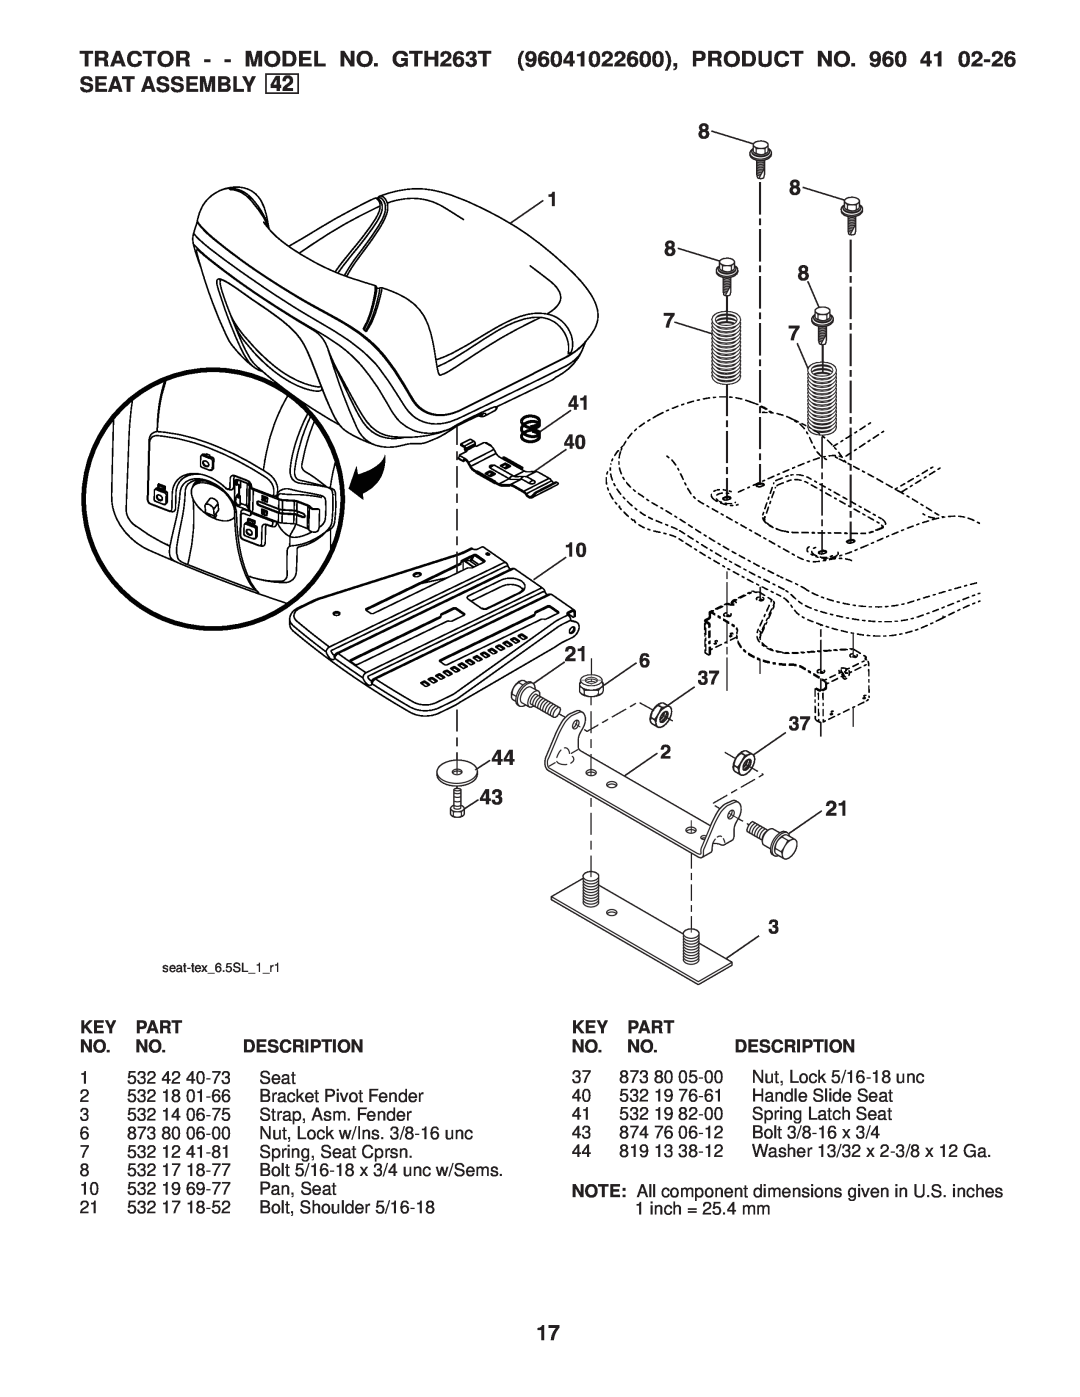 Husqvarna GTH263 T manual Seat Assembly, TRACTOR - - MODEL NO. GTH263T 96041022600, PRODUCT NO, Part, Description 